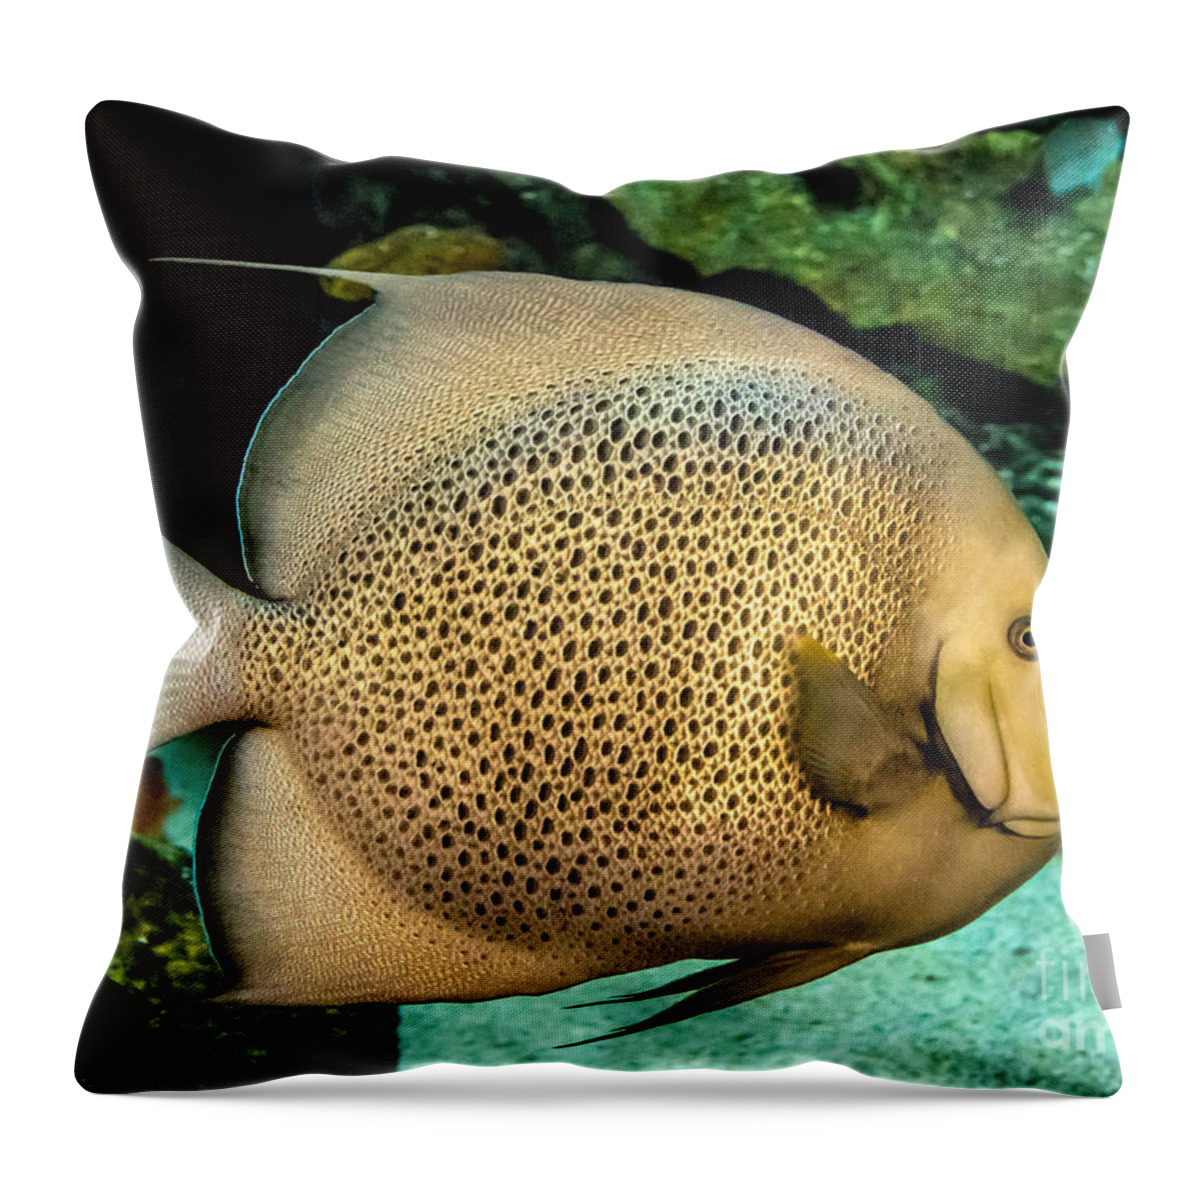 Chub Throw Pillow featuring the photograph Big Beautiful Fish by Cheryl Baxter